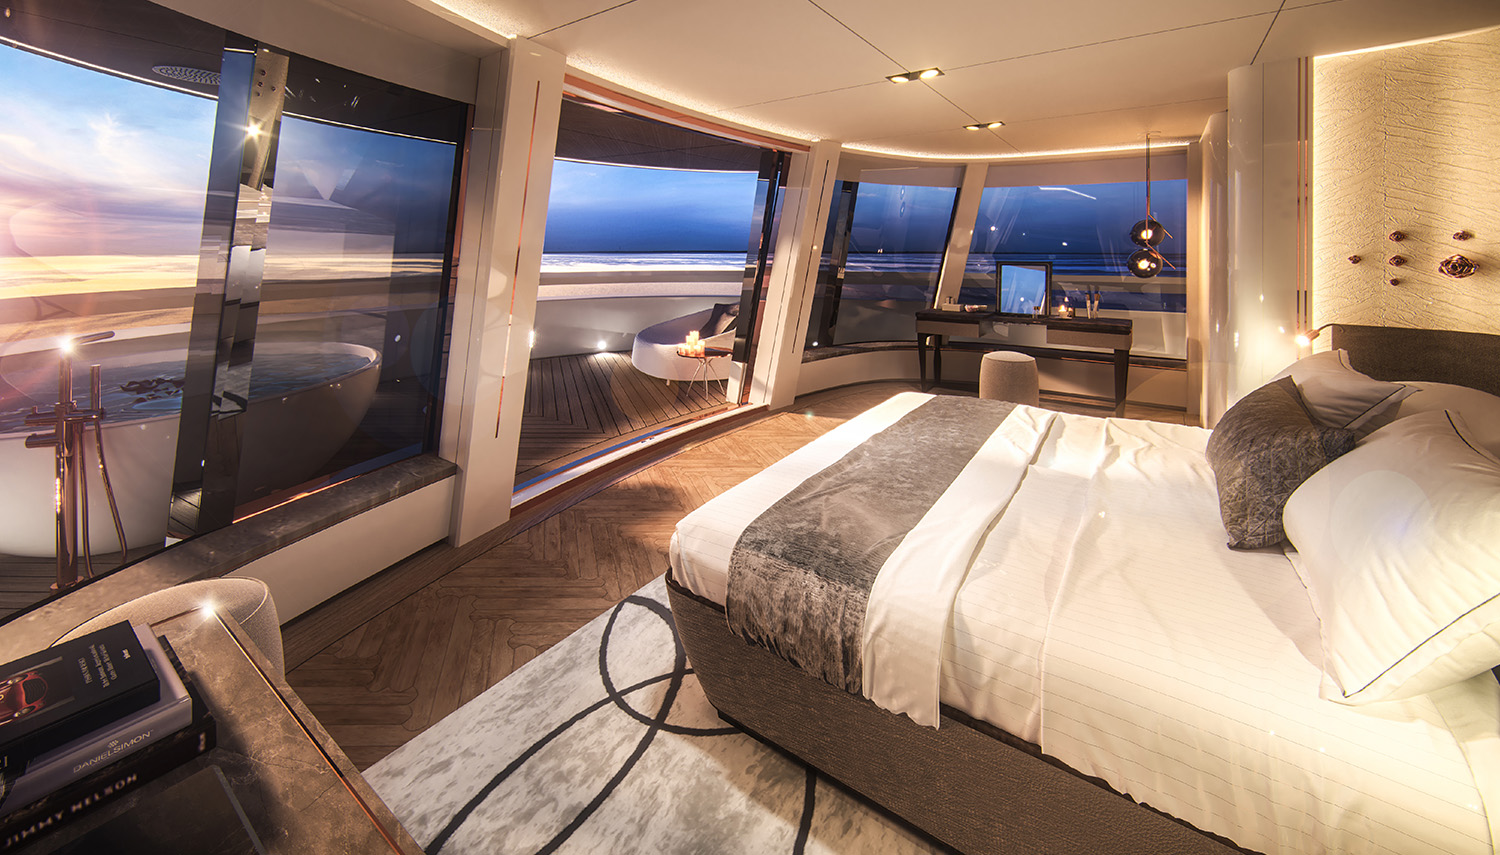 Vripack - Maharani - Bedroom interior - American Loft inspired